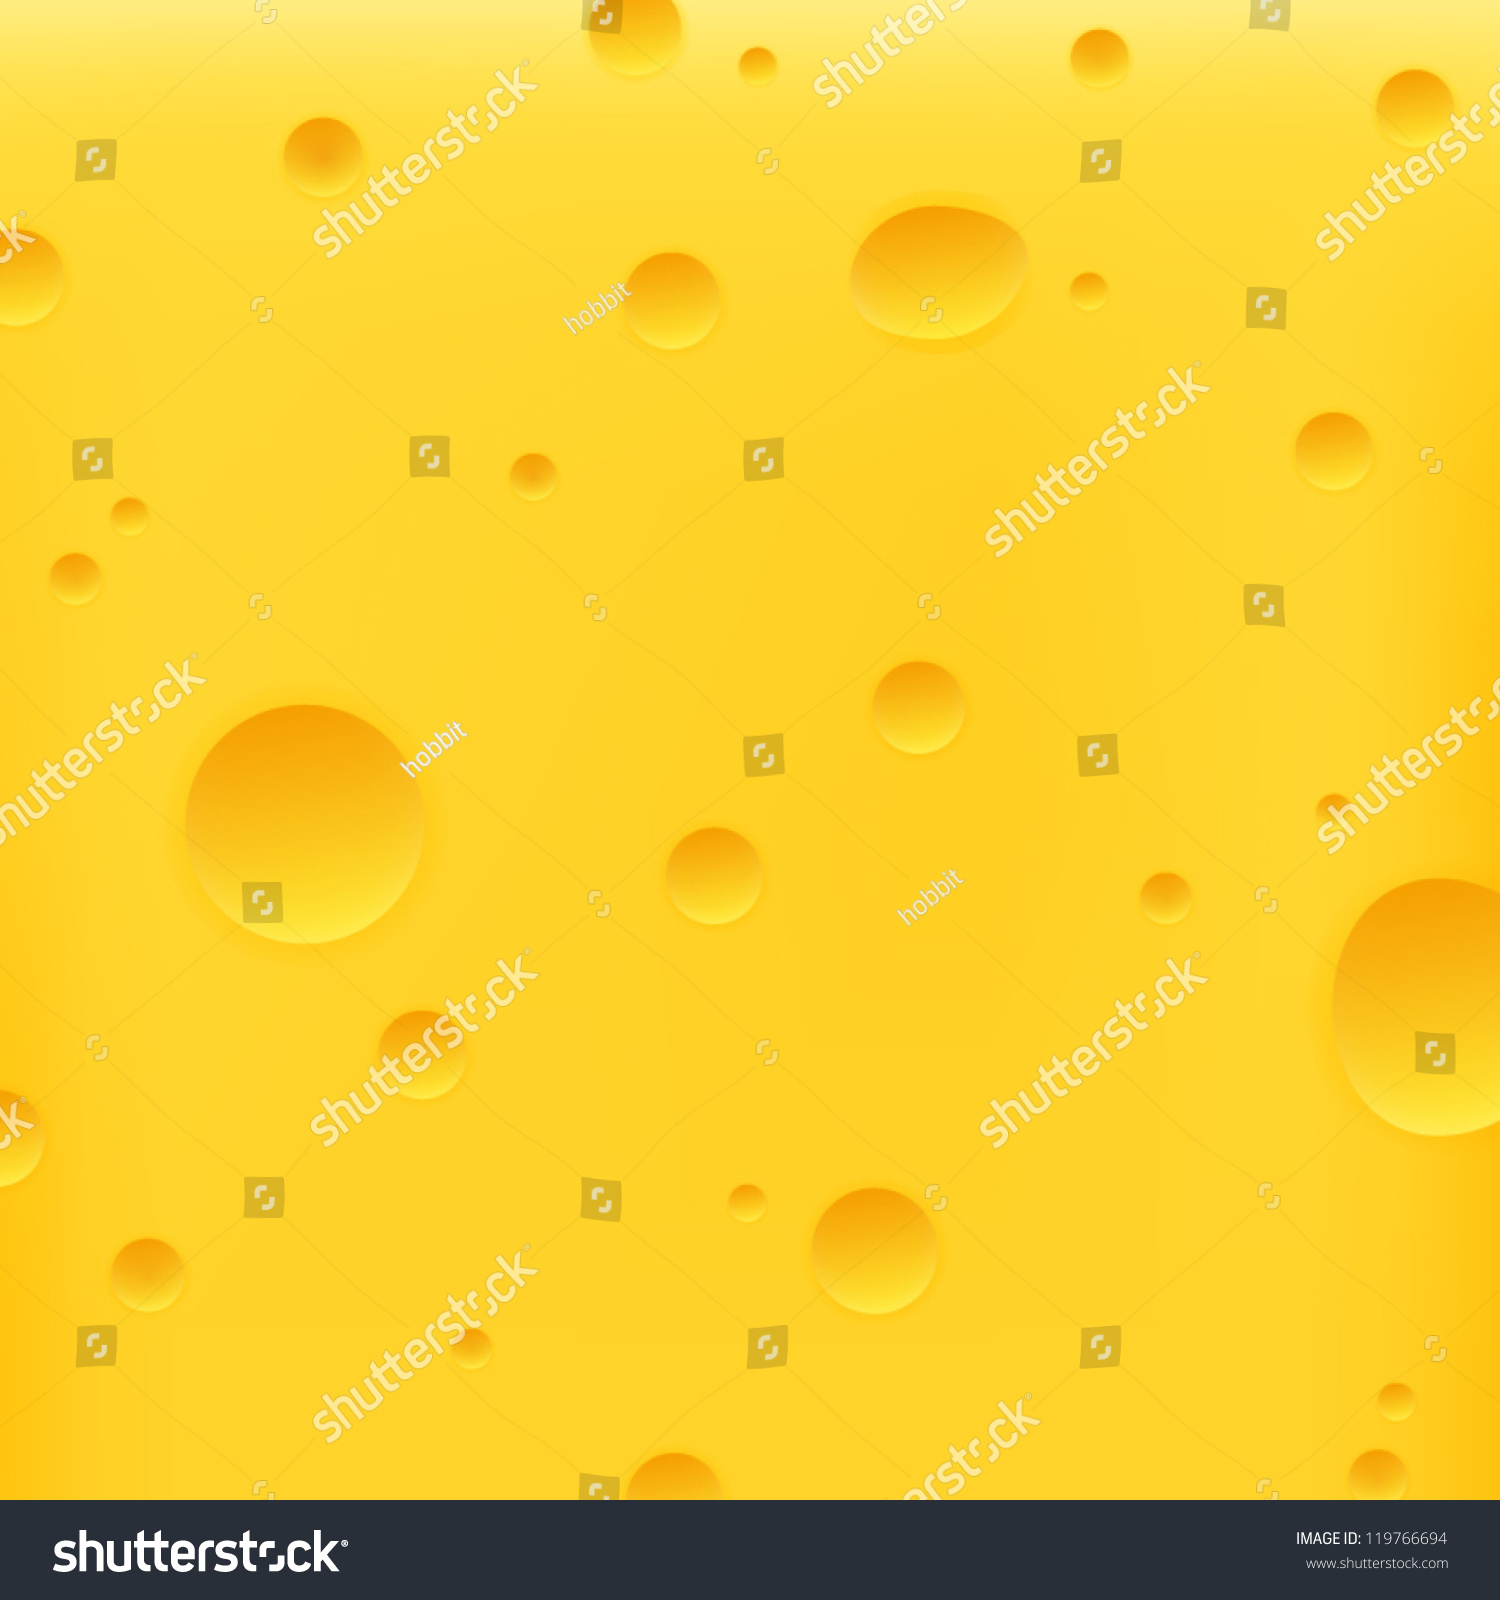 Cheese Vector Background - 119766694 : Shutterstock